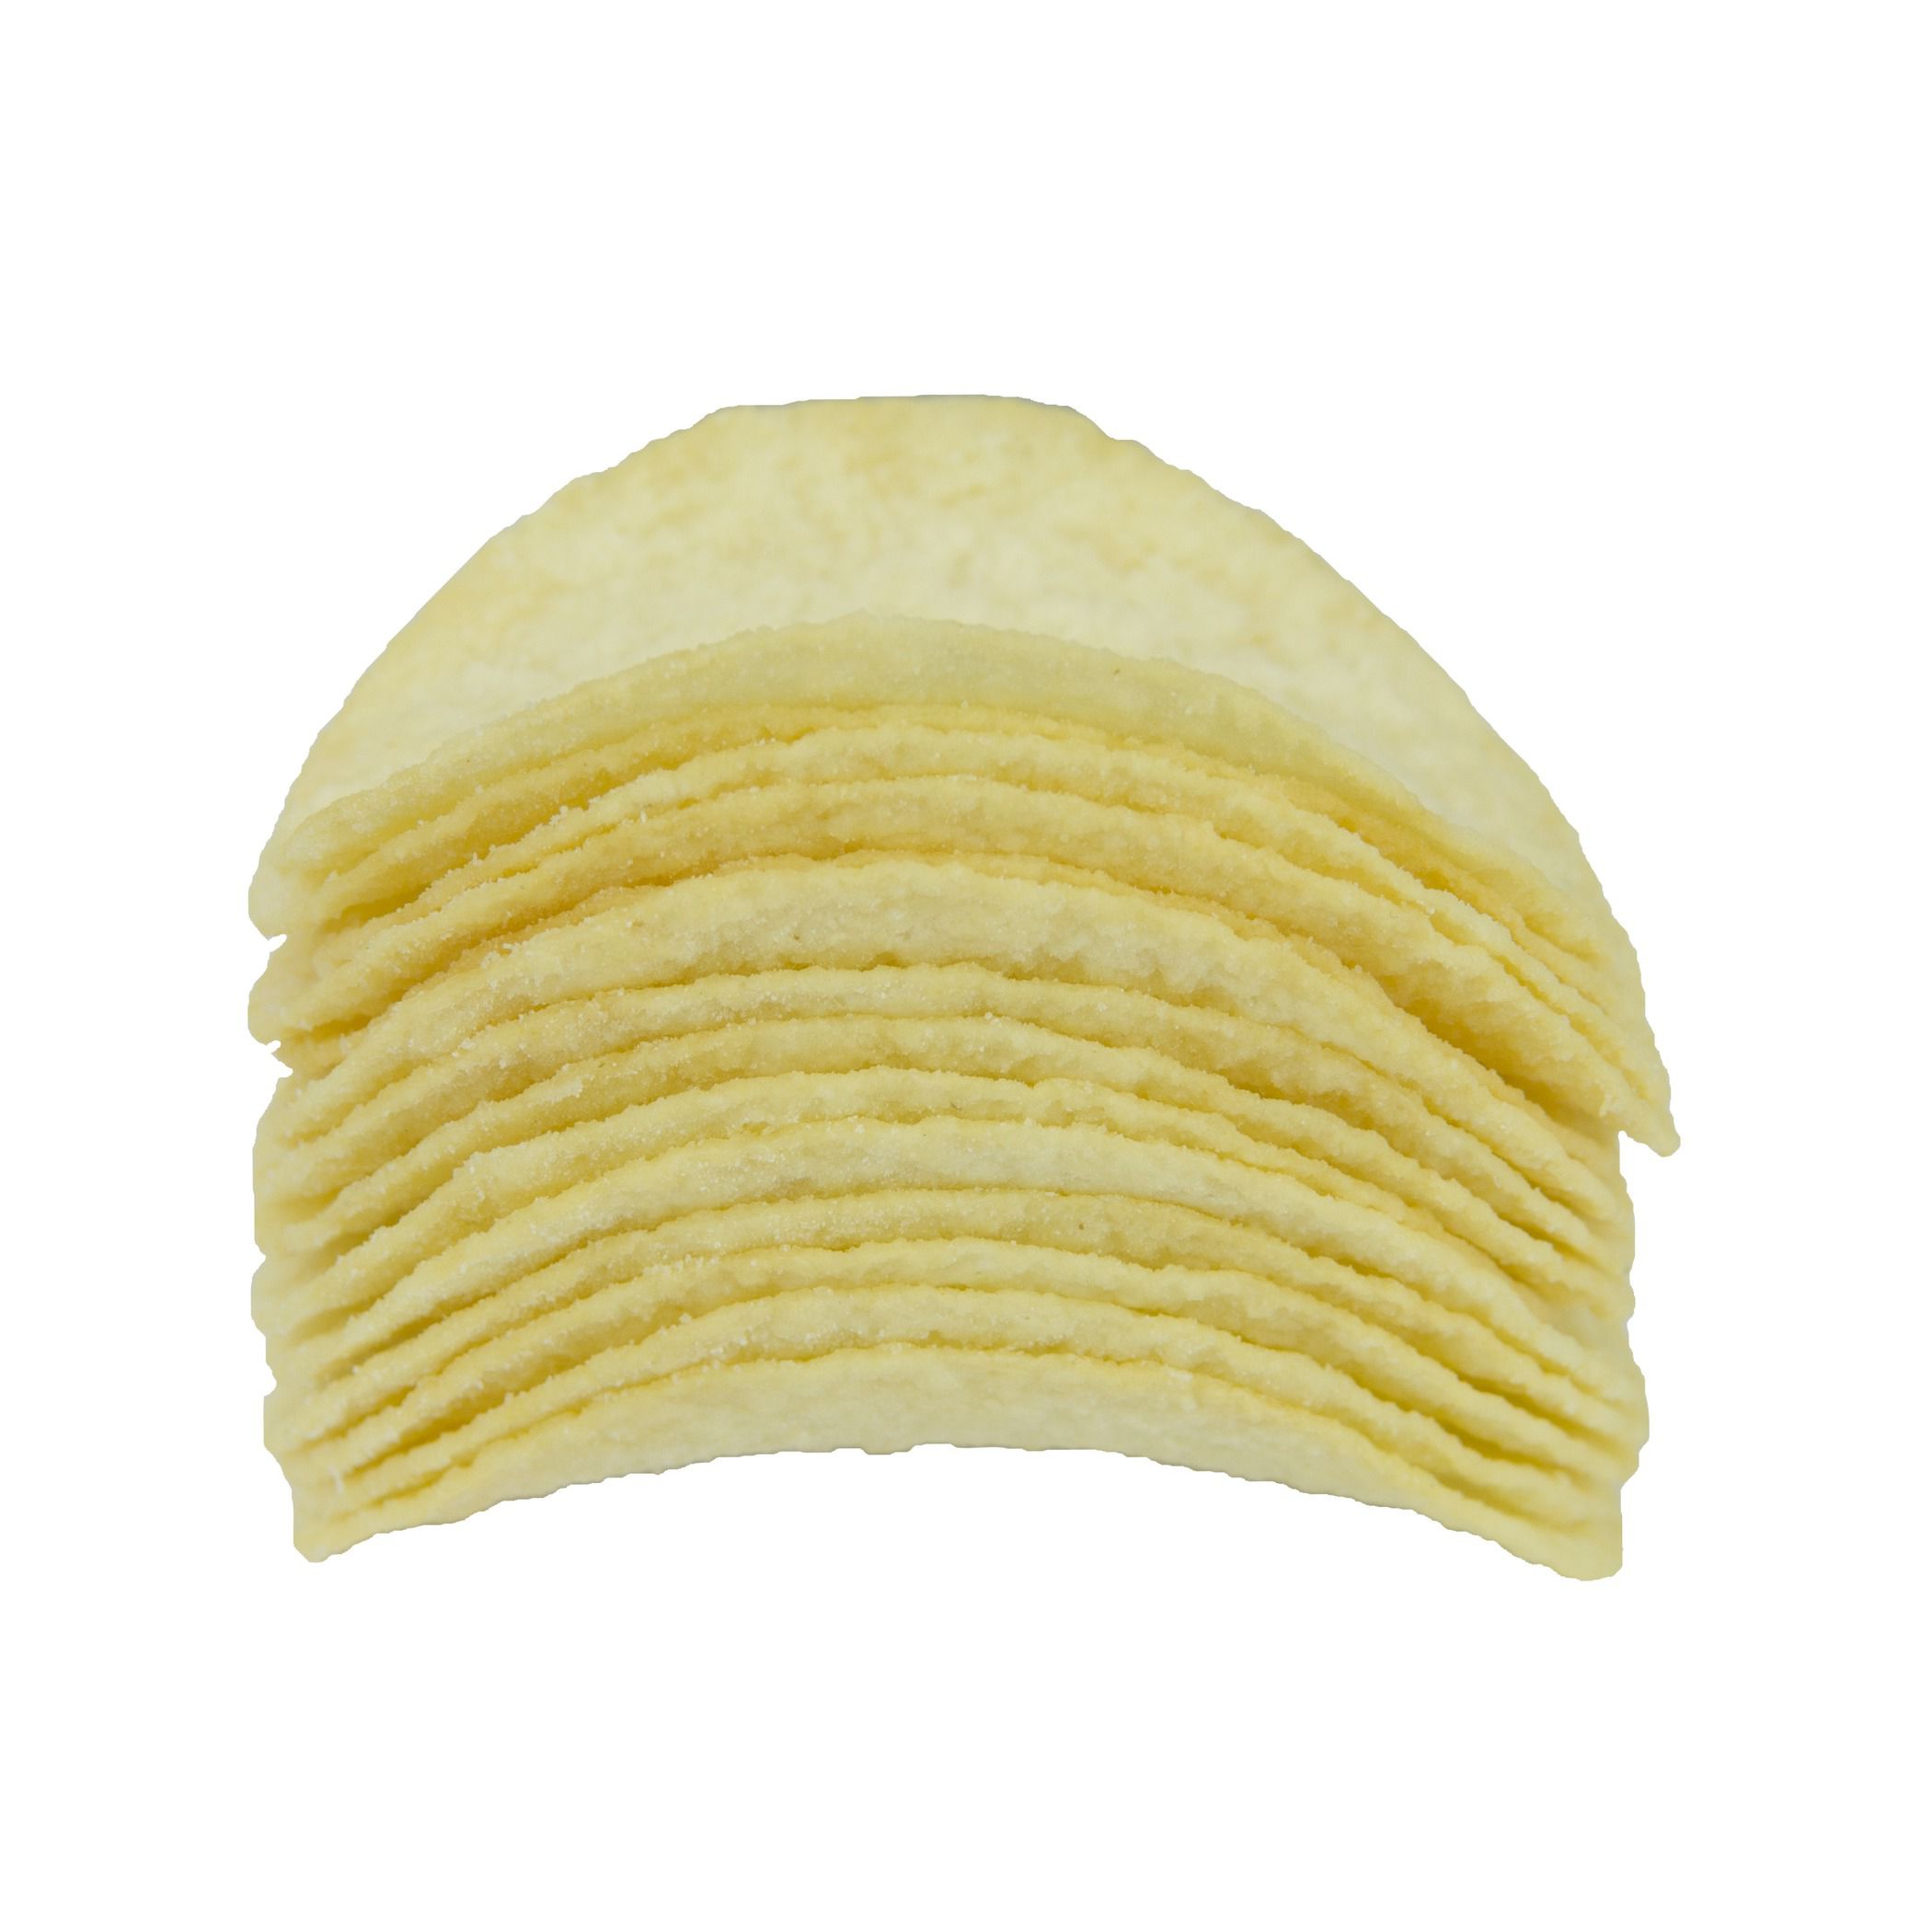 Pringles® Grab & Go Sour Cream & Onion Crisps product image